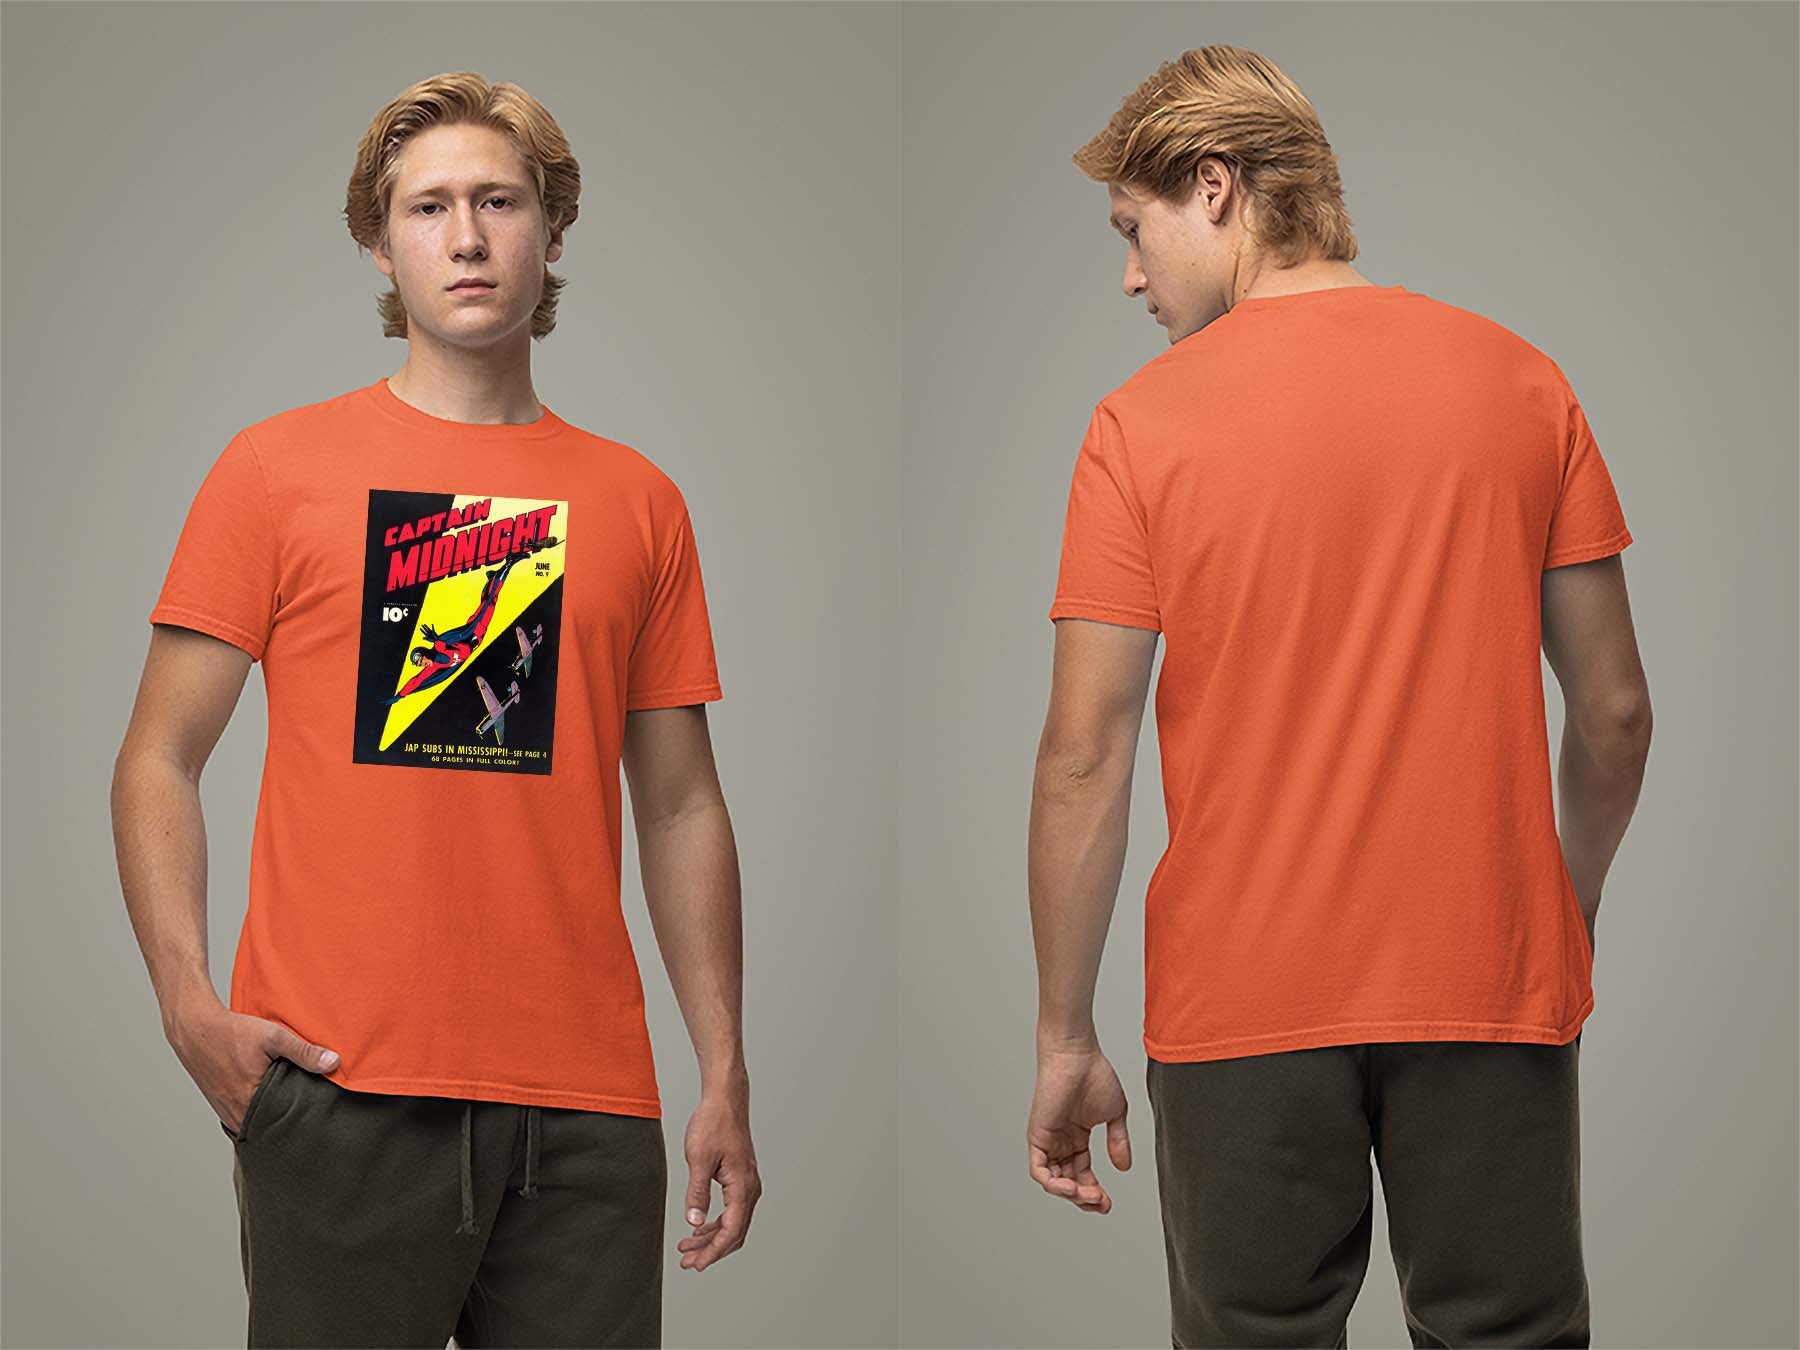 Captain Midnight No9 T-Shirt Small Orange